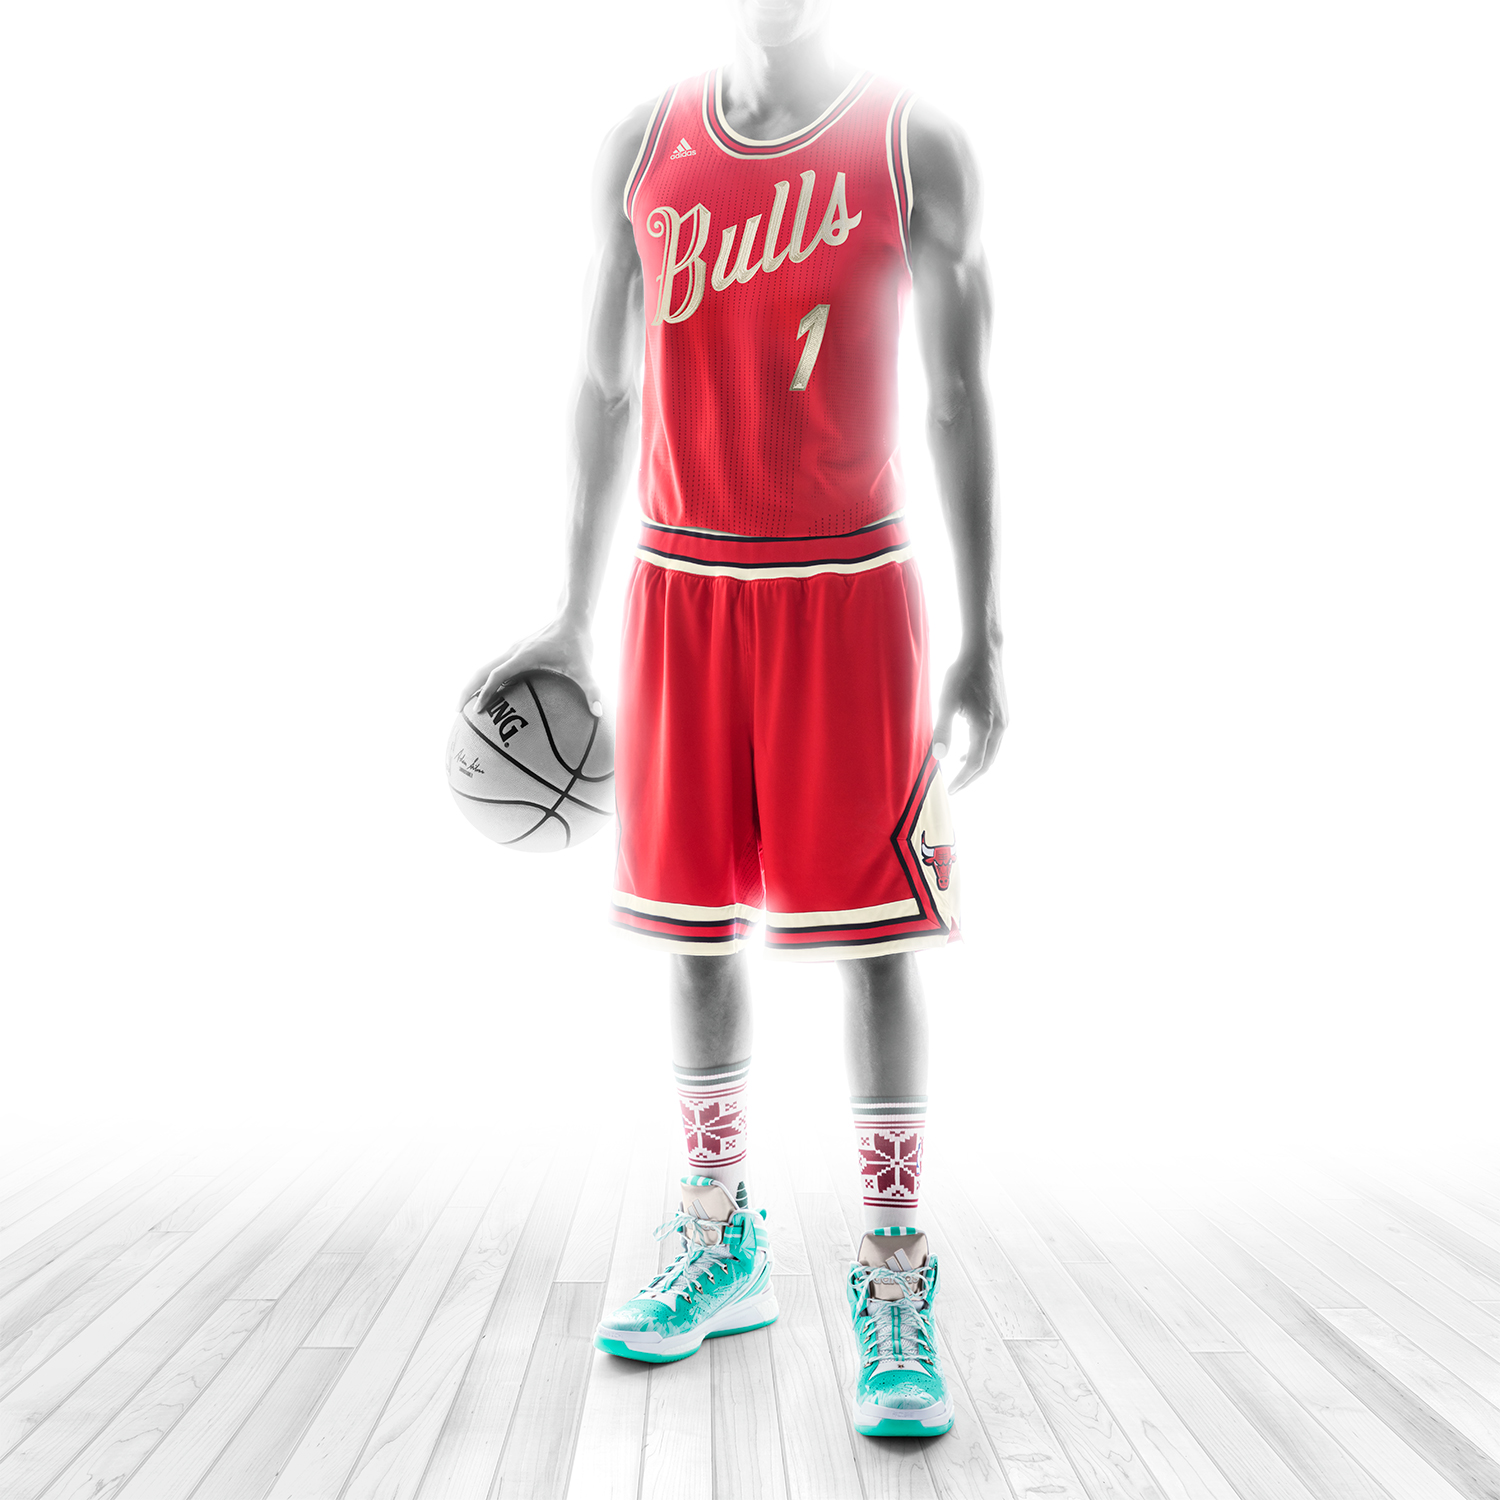 Chicago Bulls Derrick Rose NBA Shirts for sale